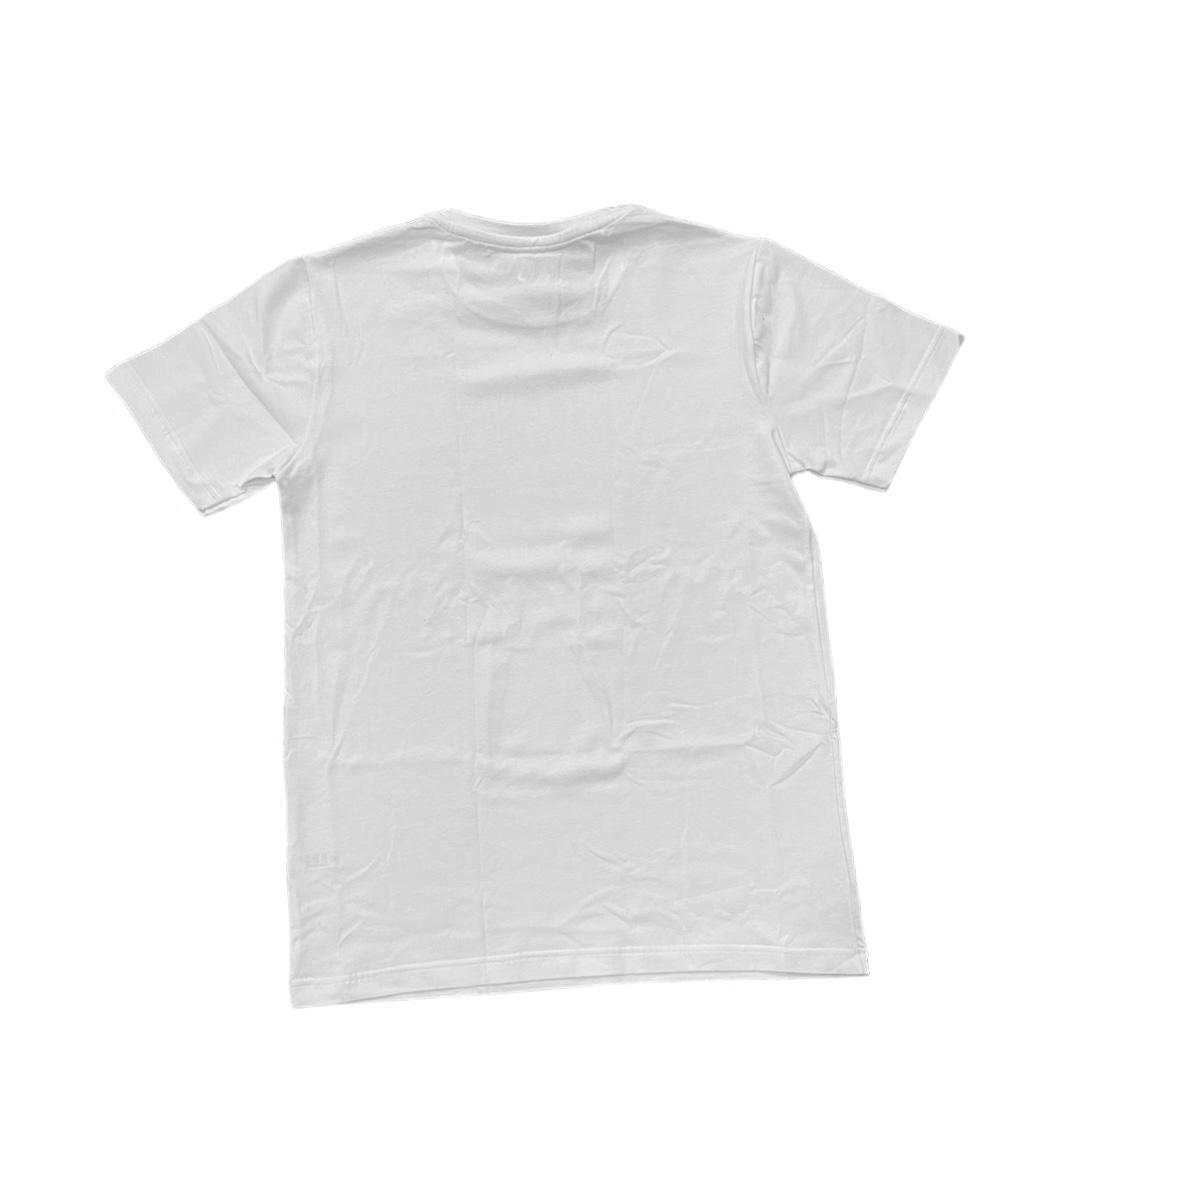 T-Shirt Uomo Mm ICON 47300